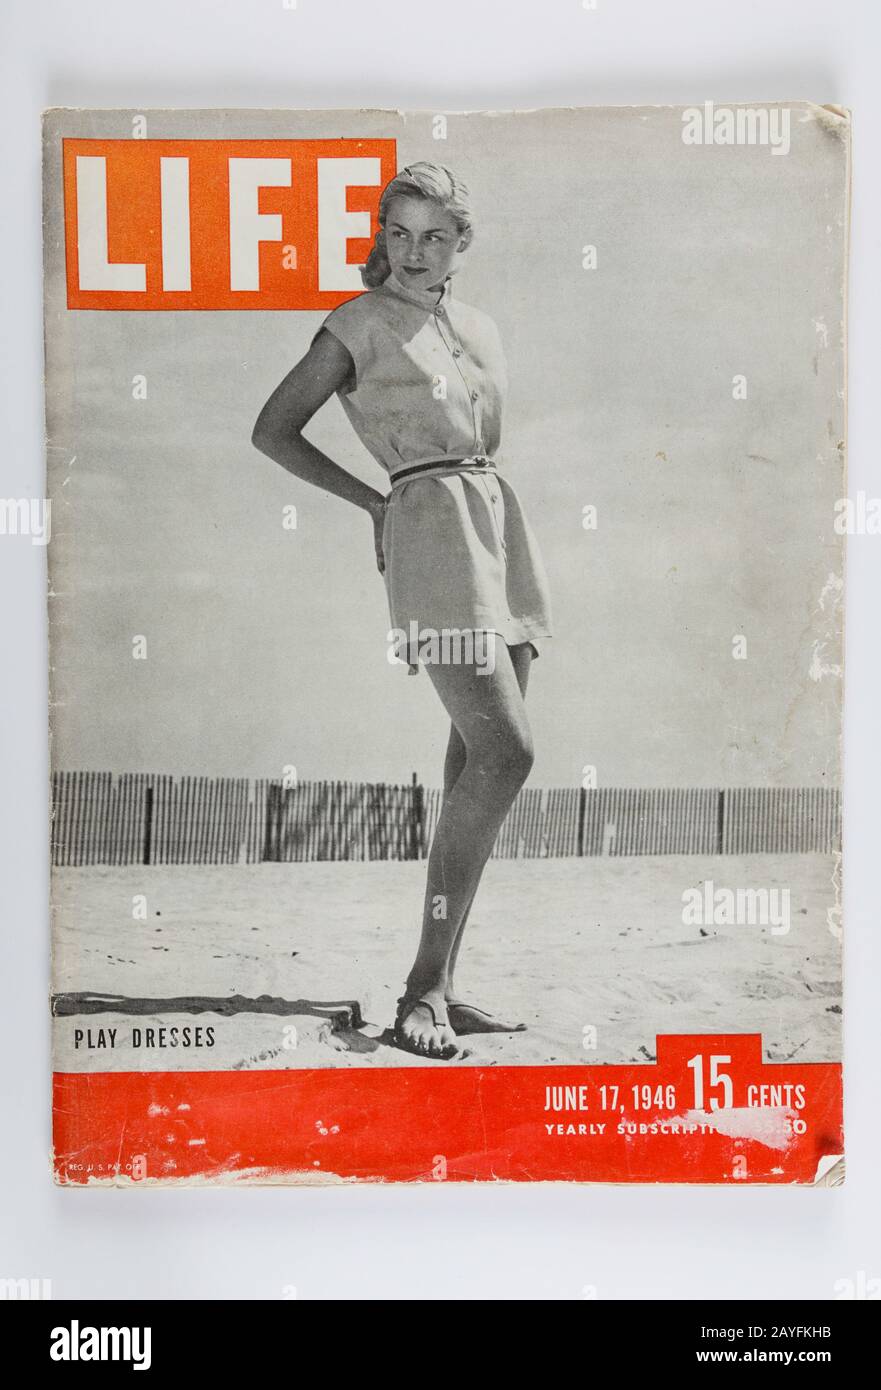 17 June 1946 Life Magazine Cover, USA Stock Photo